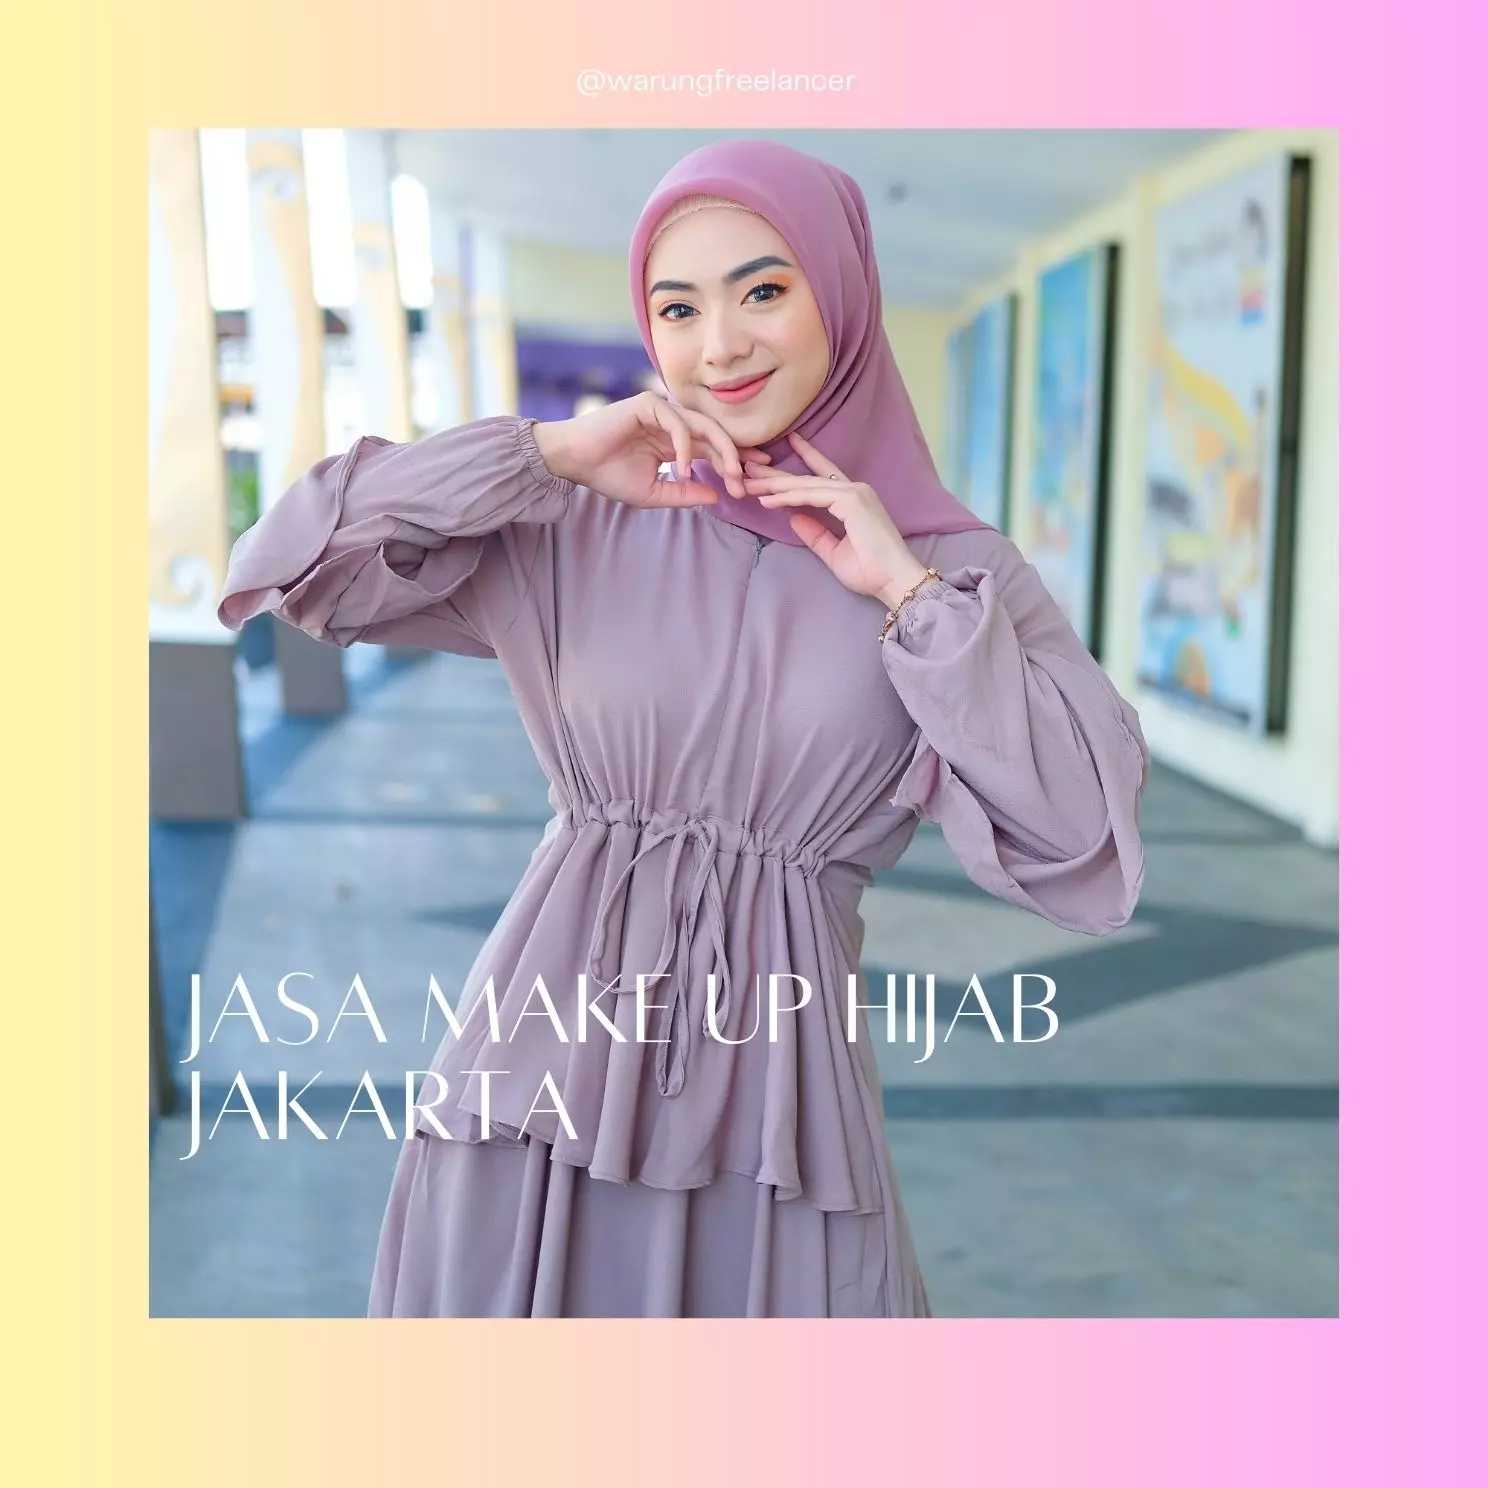 Pengertian Jasa Make Up Hijab Jakarta